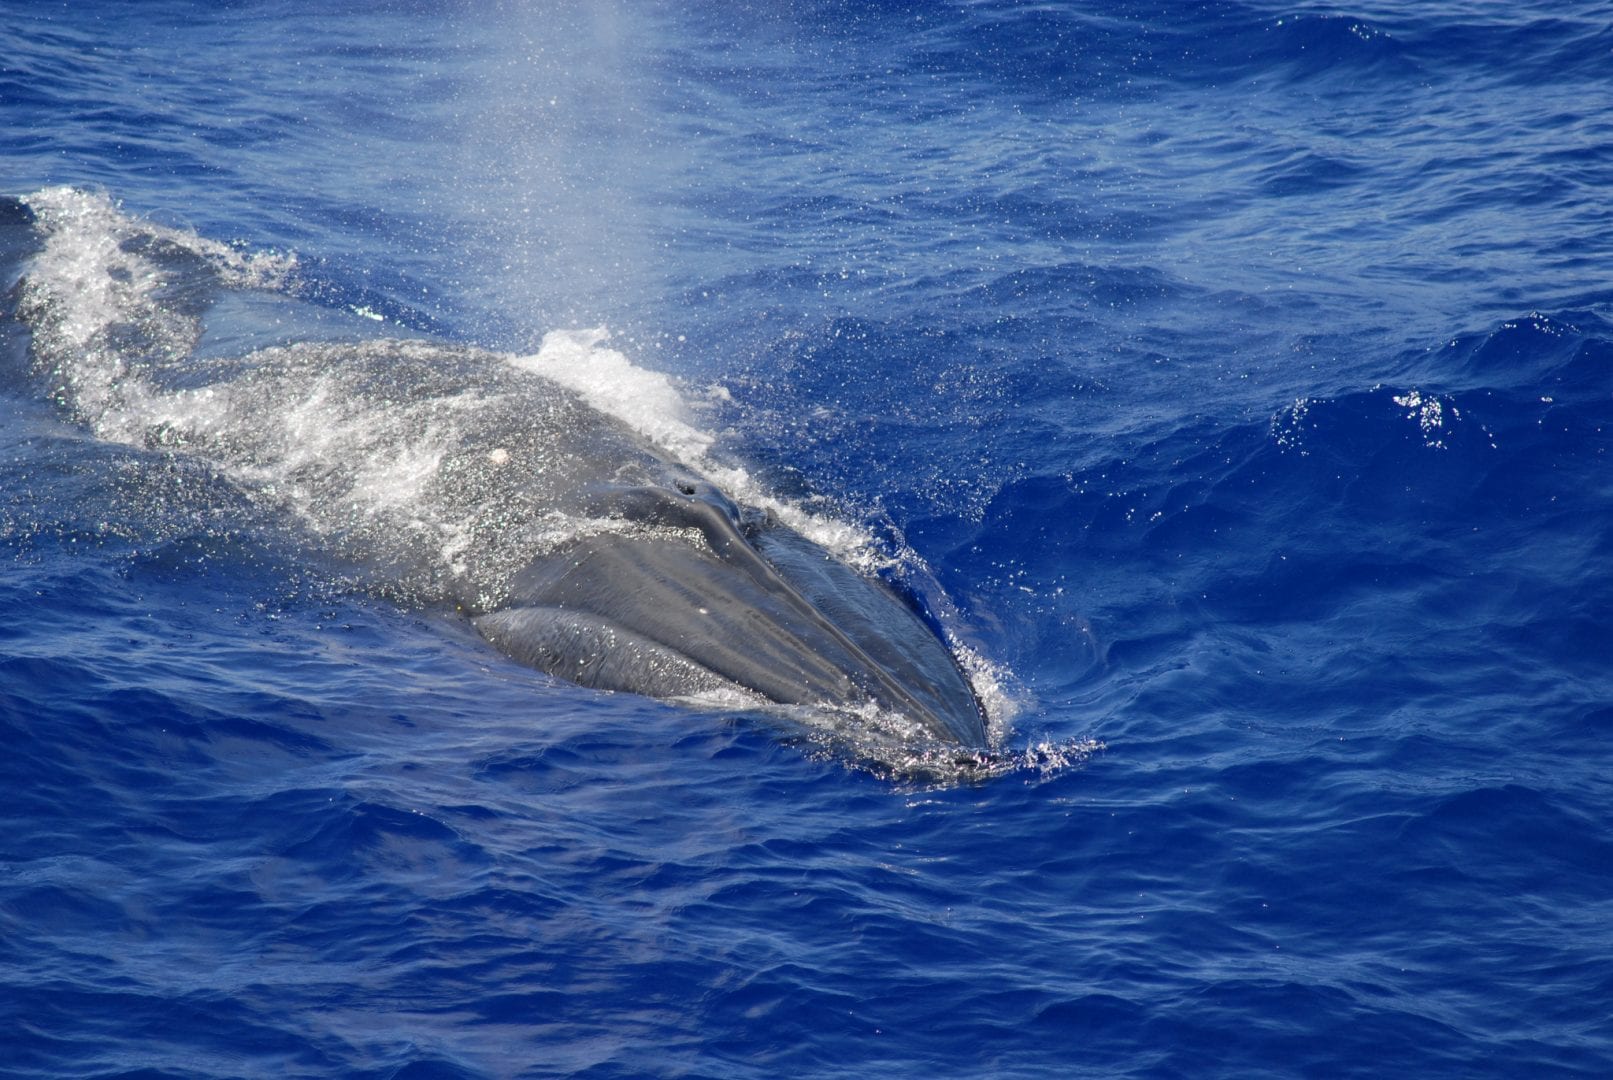 Baleias - características e principais espécies ao redor do mundo